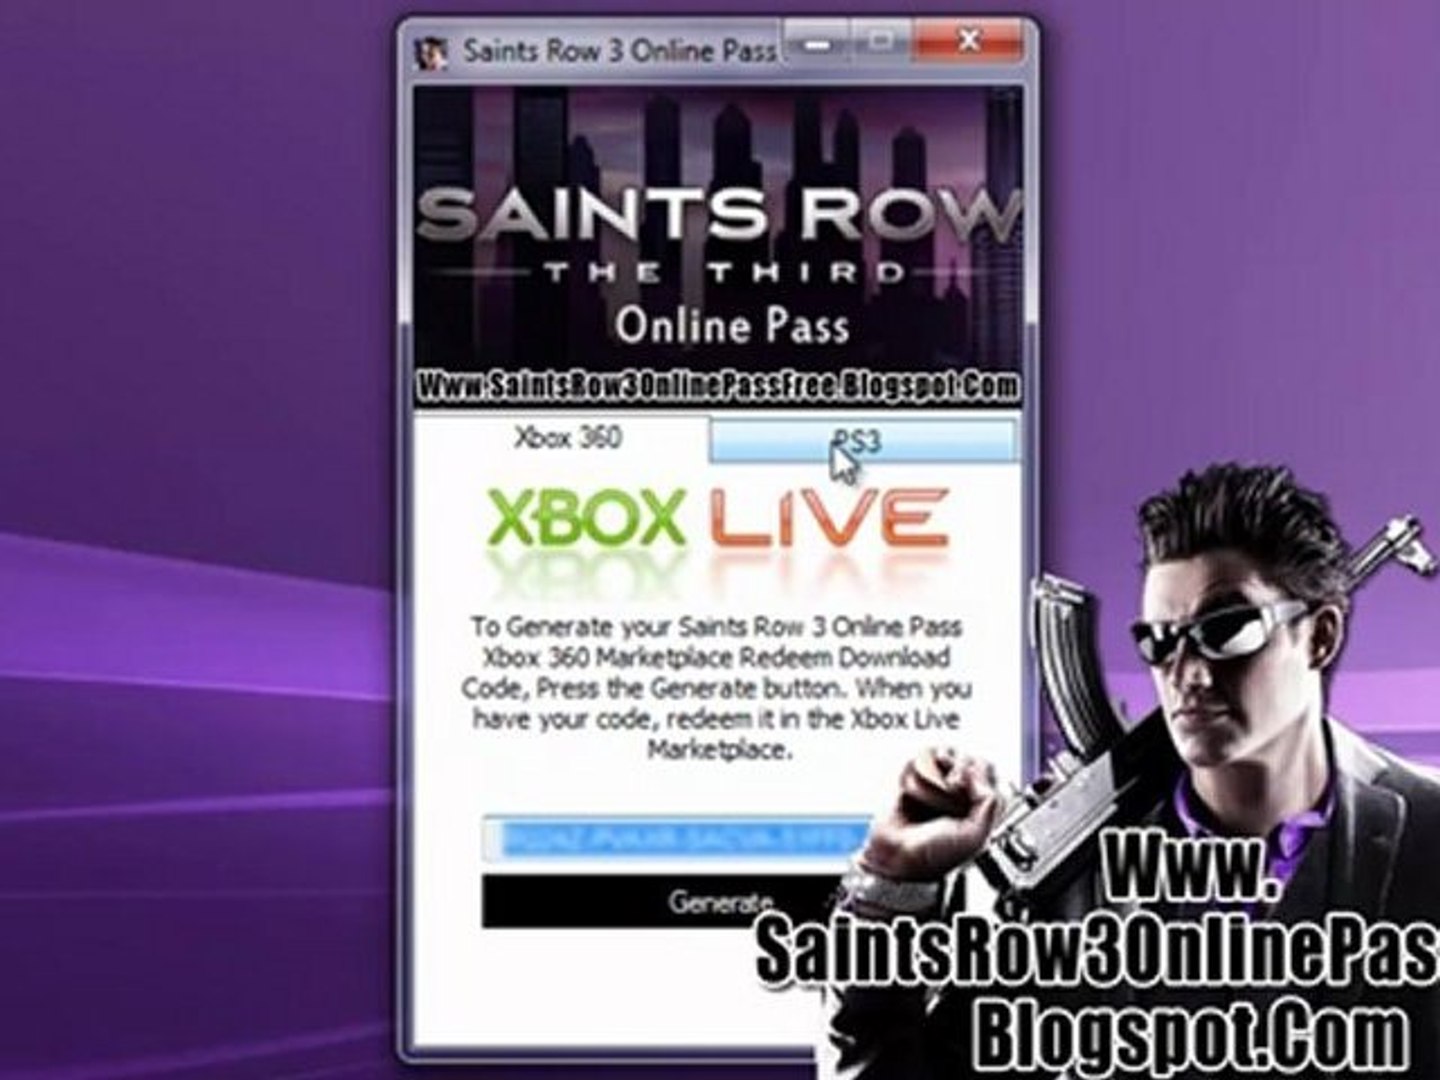 Unlock Saints Row The Third Online Pass Code Free! - video Dailymotion